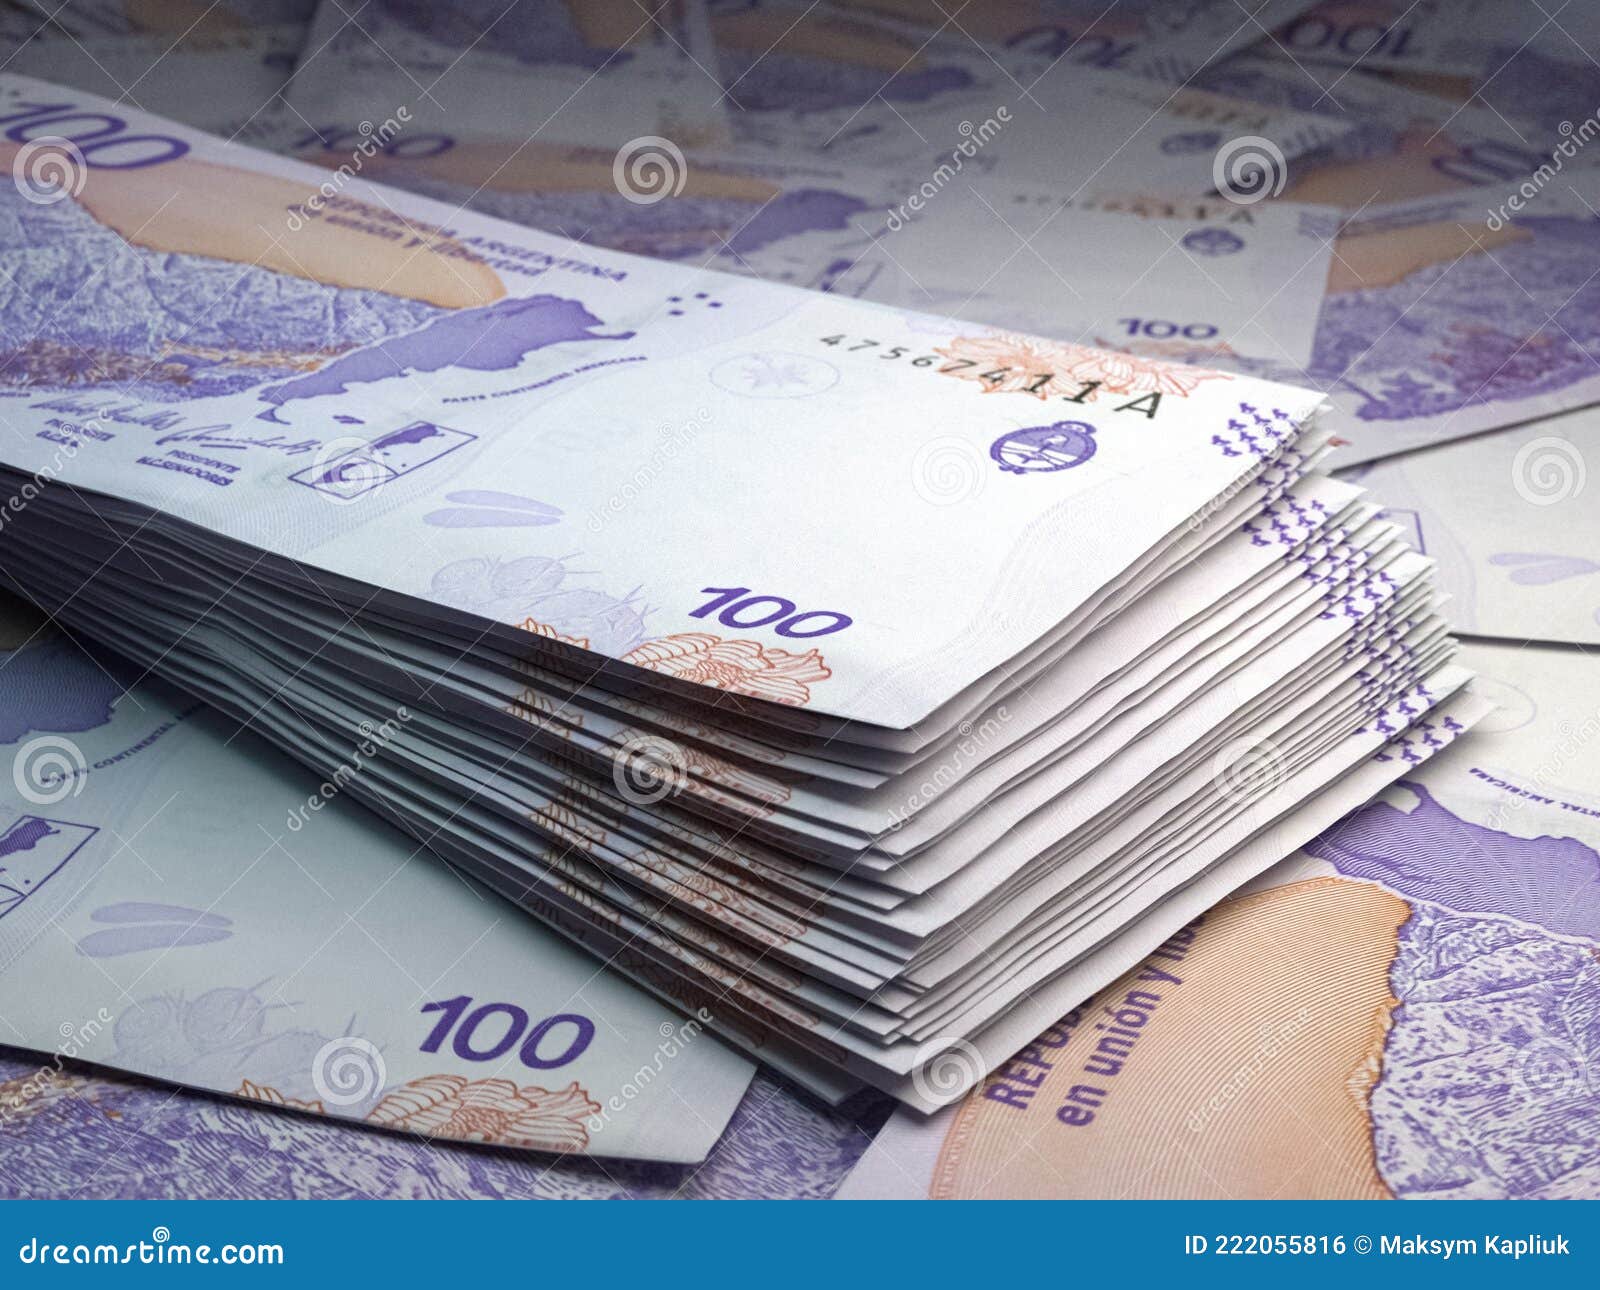 argentine money. argentine peso banknotes. 100 ars pesos bills